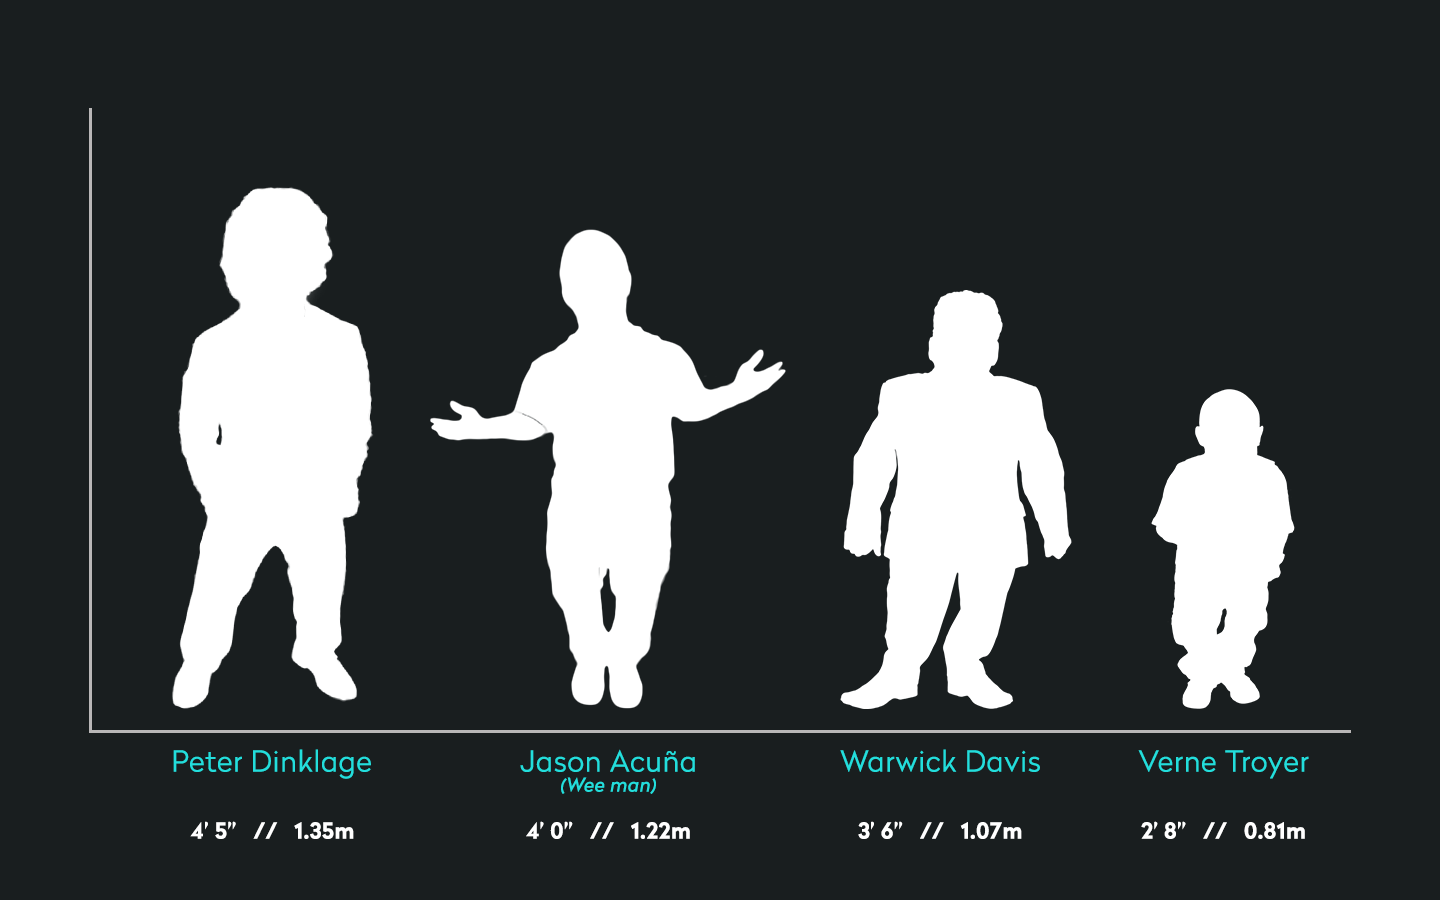 types of dwarfism